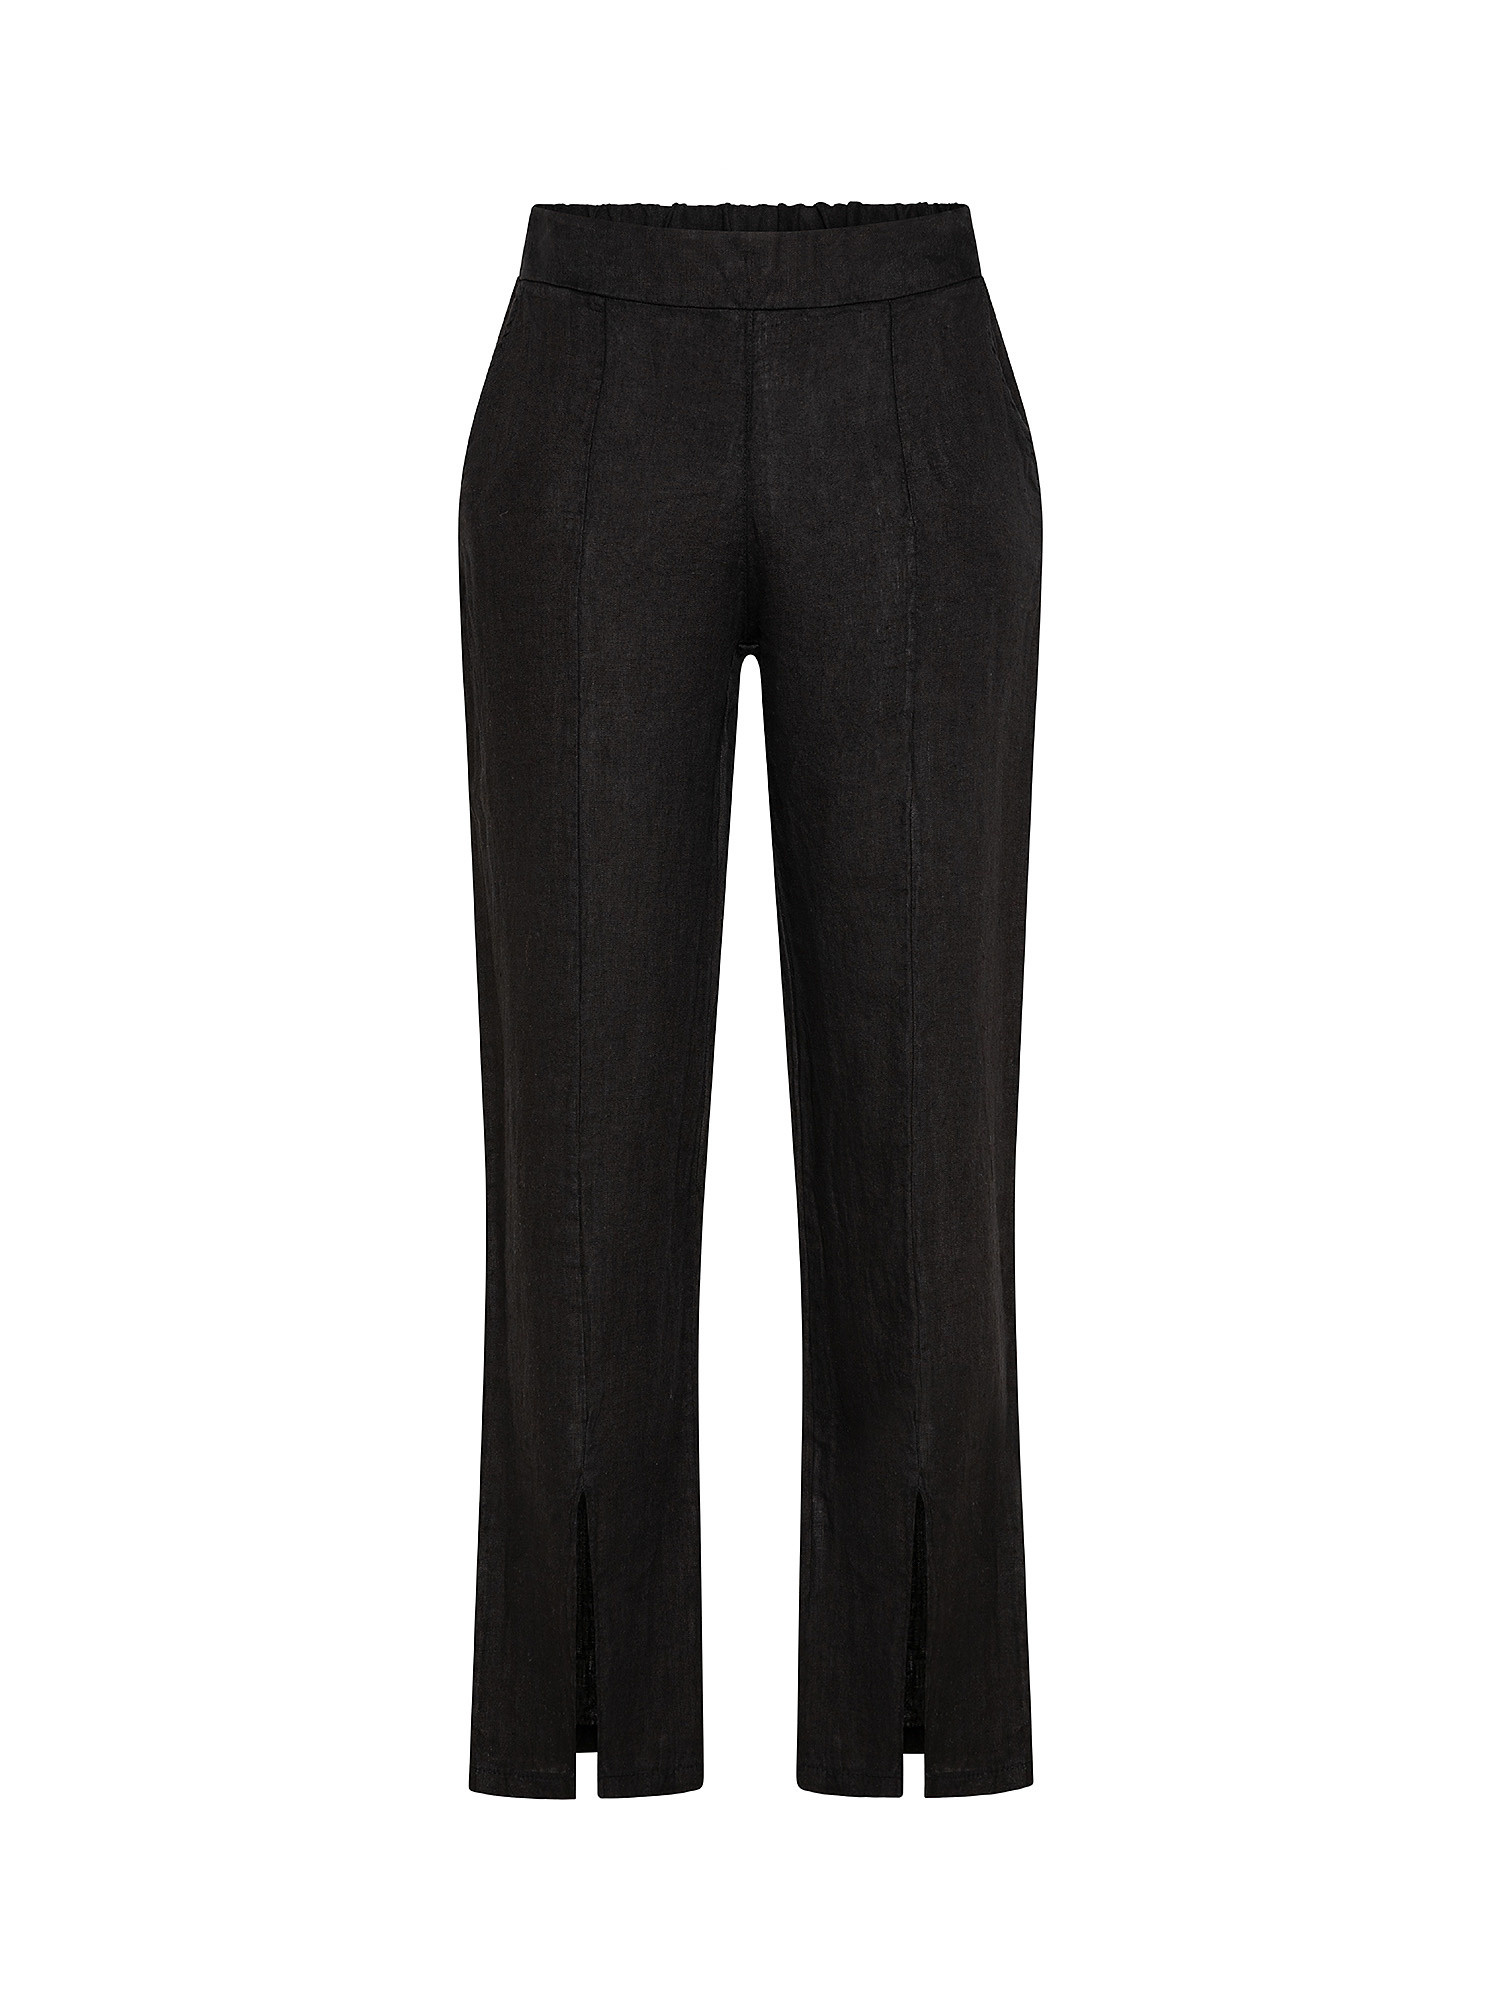 Pantalone puro lino con spacco, Nero, large image number 0